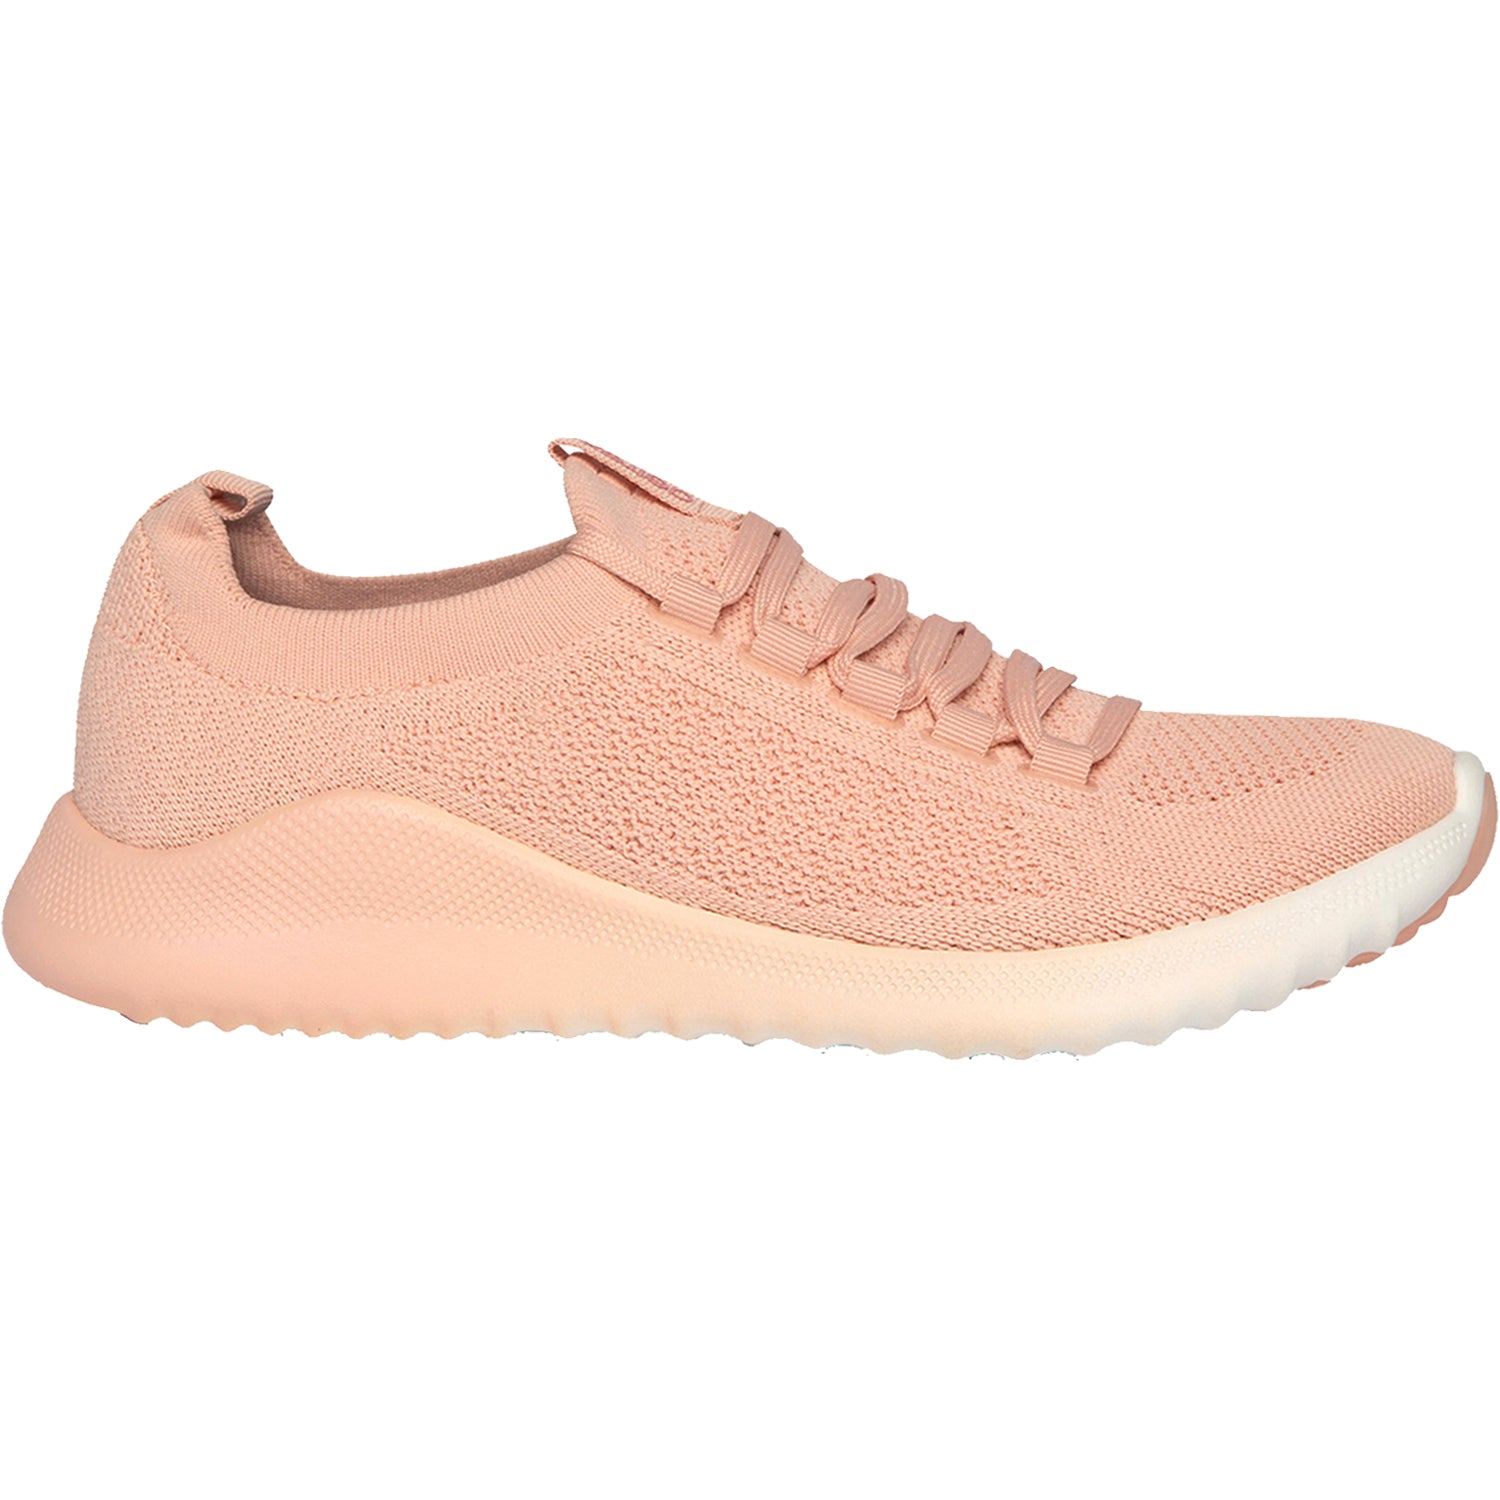 Aetrex Carly Light Pink | Women's Orthotic Sneakers | Footwear etc.